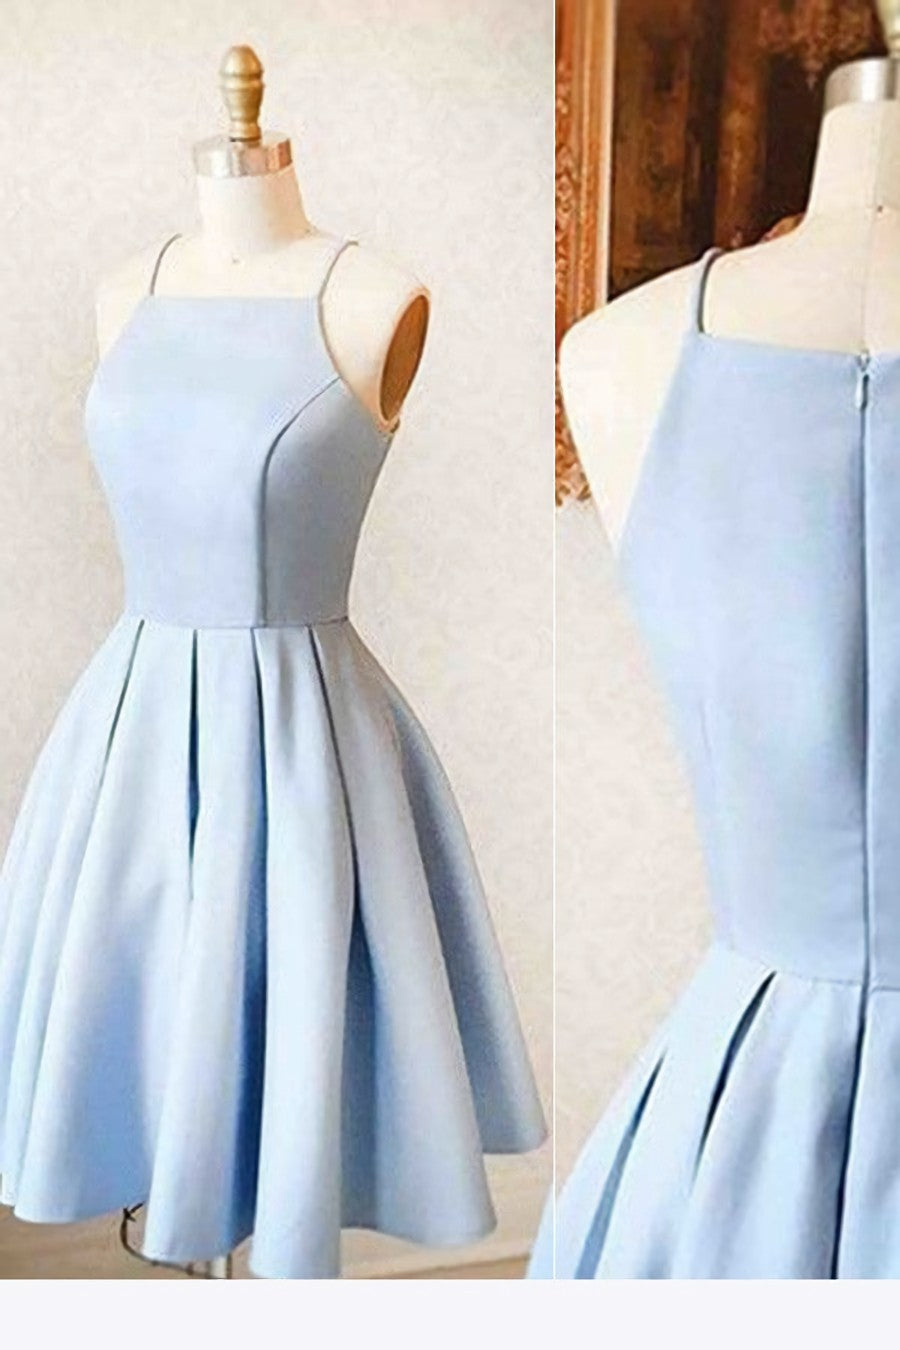 Prom Dress 2037, Satin Light blue Simple Short Prom Dress,Mini Homecoming dress for teens,Cocktail Dresses